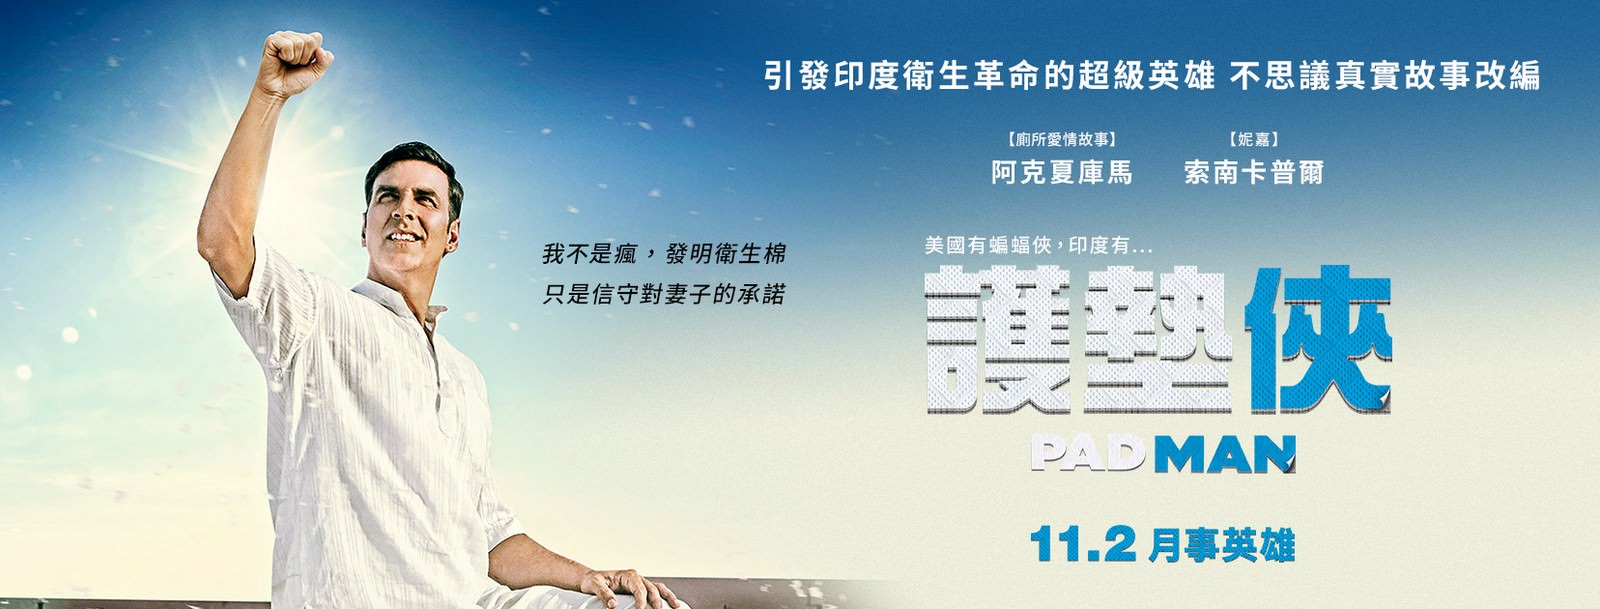 Movie, PadMan(印度, 2018年) / 護墊俠(台灣) / 印度合伙人(中國), 電影海報, 台灣, 橫板